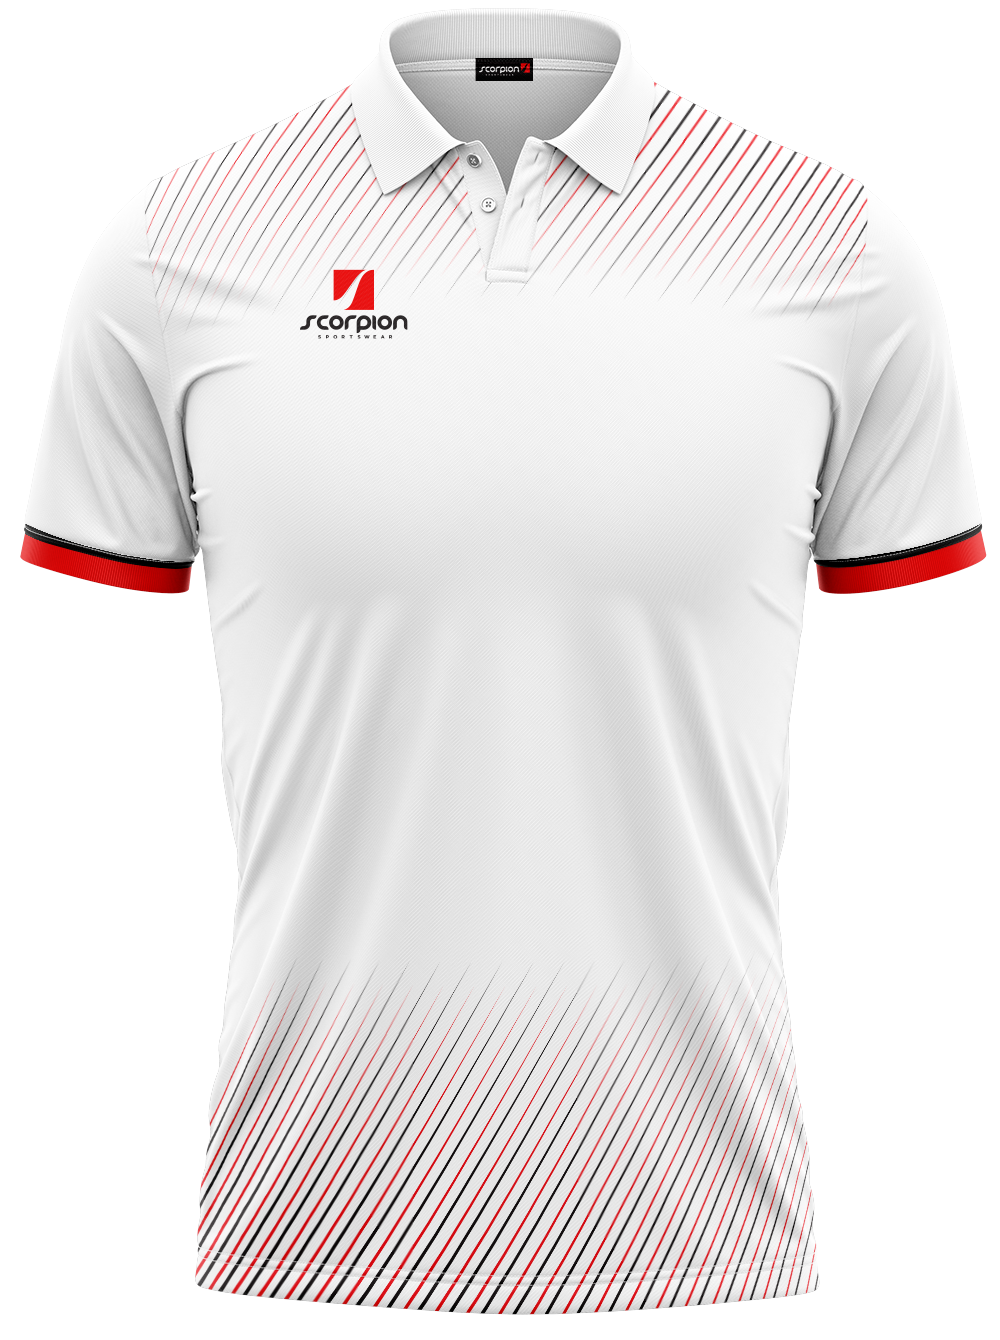 Scorpion Polo Shirts Pattern 3 - White/Red/Black